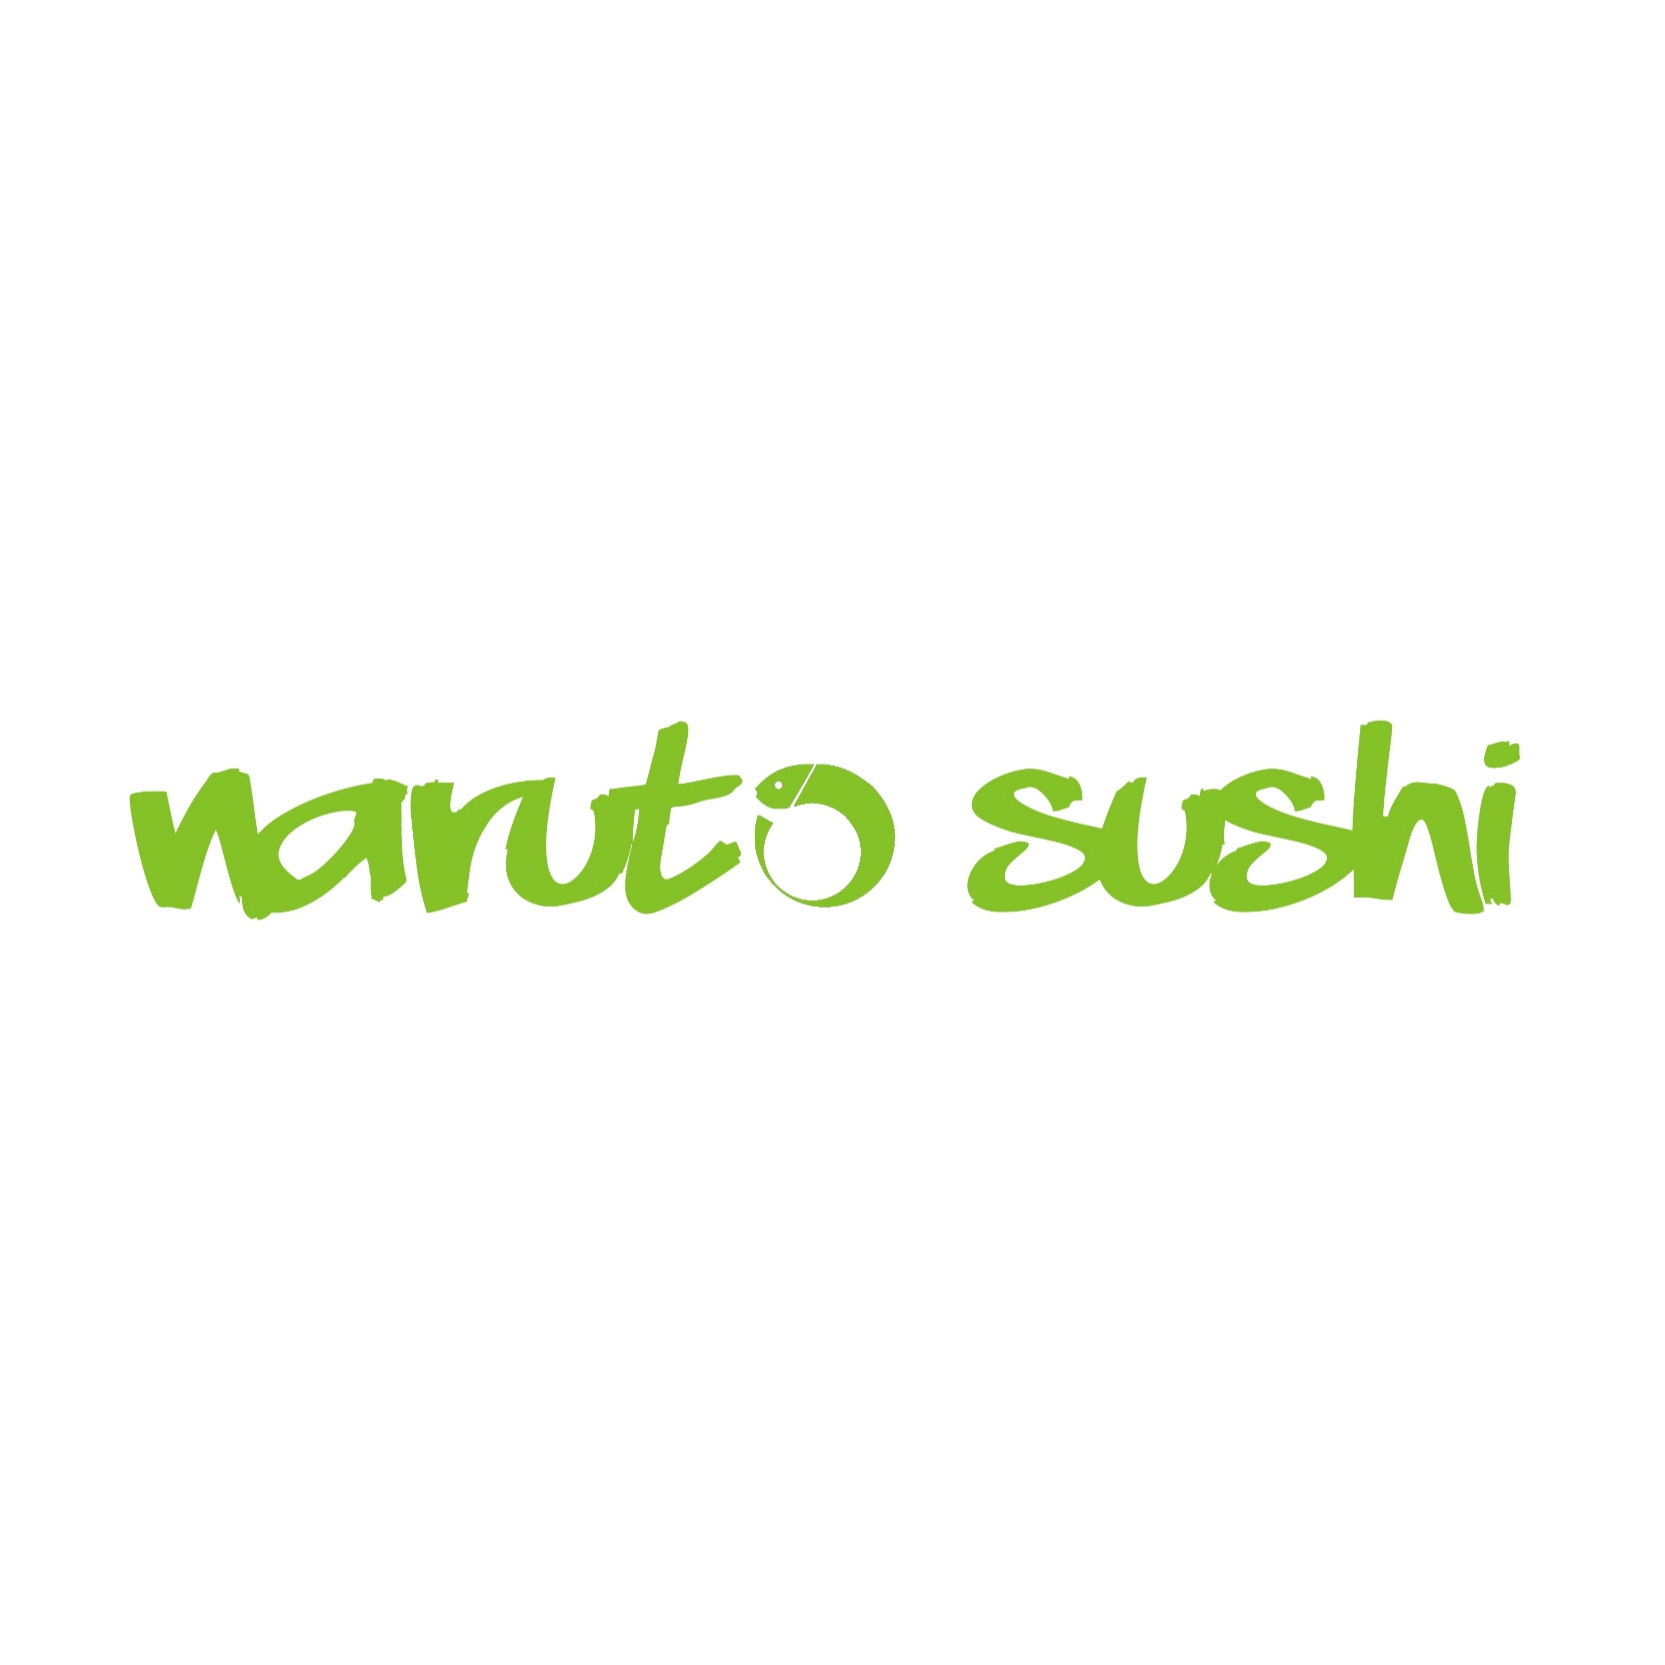 Naruto Sushi: キッチンヘルプ/寿司シェフ募集（パートタイム） - Naruto Sushi イメージ画像